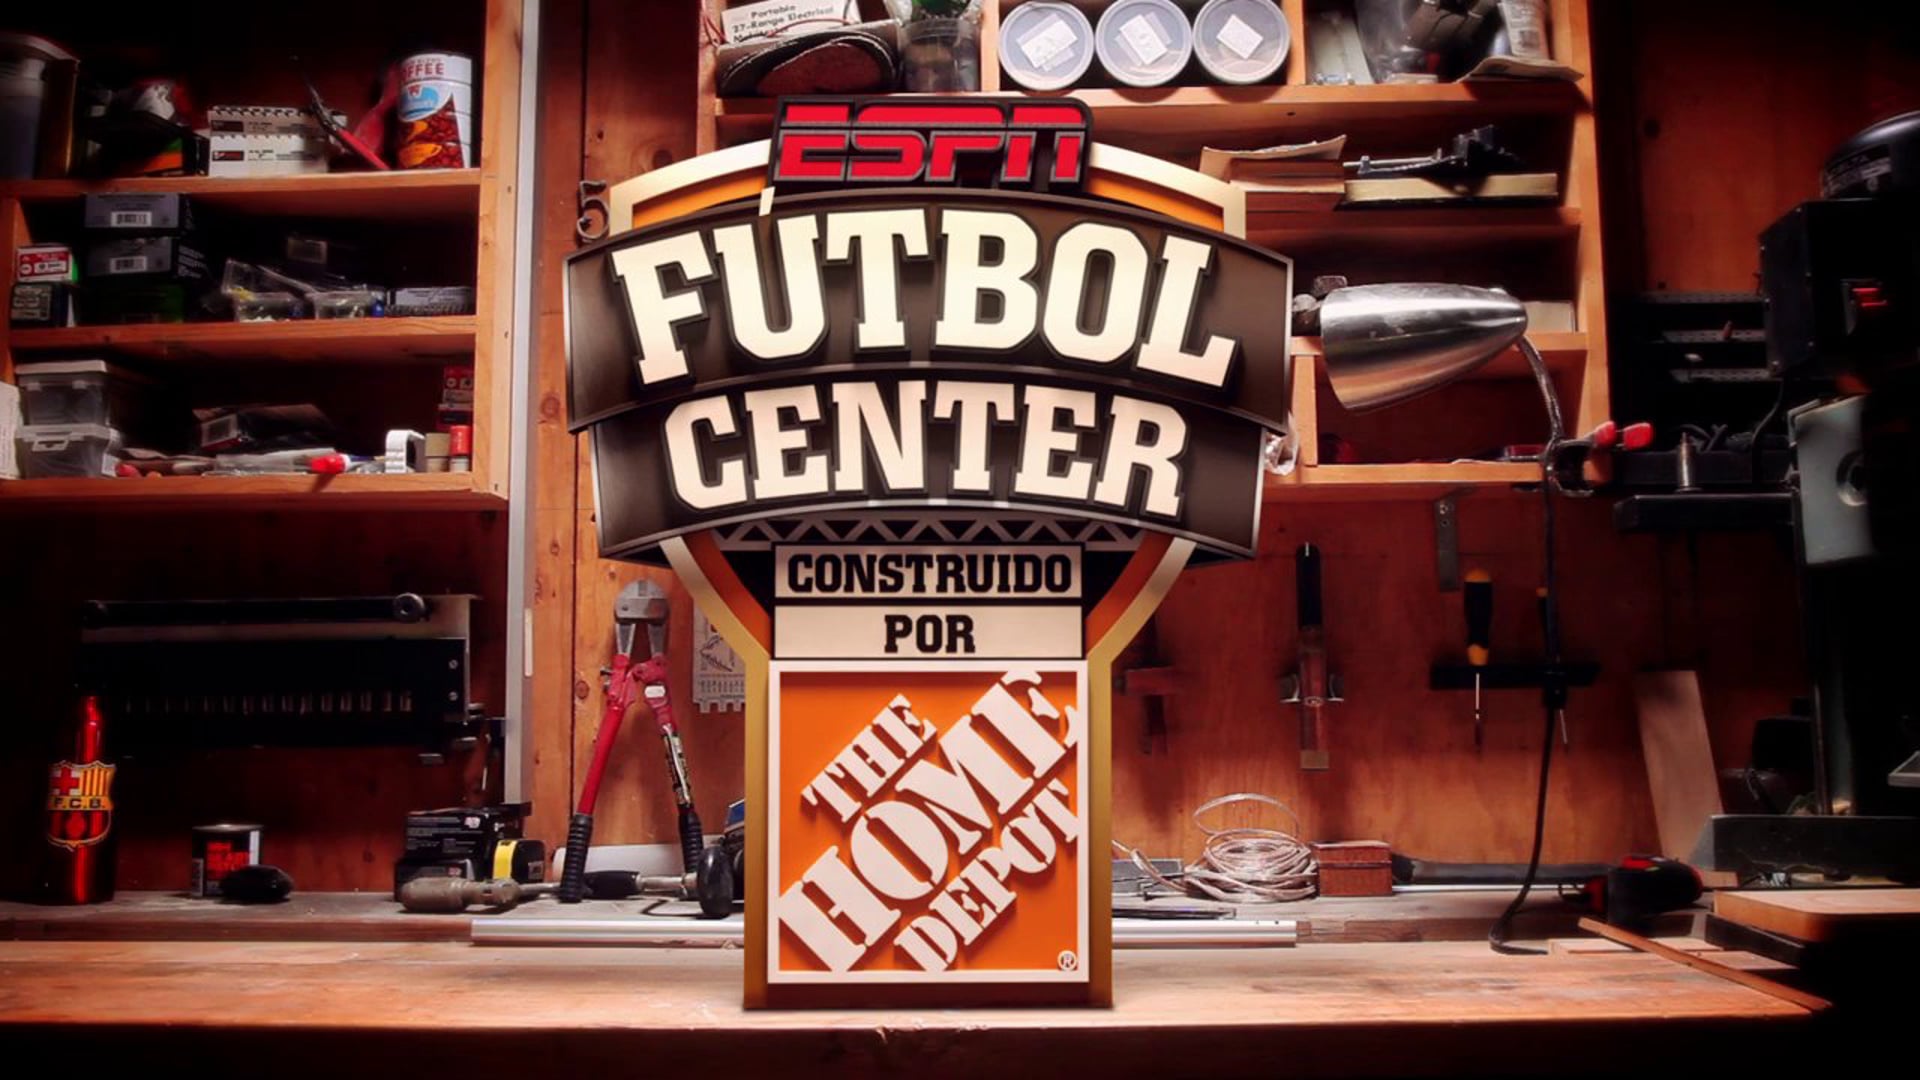 Home Depot - ESPN Futbol Center